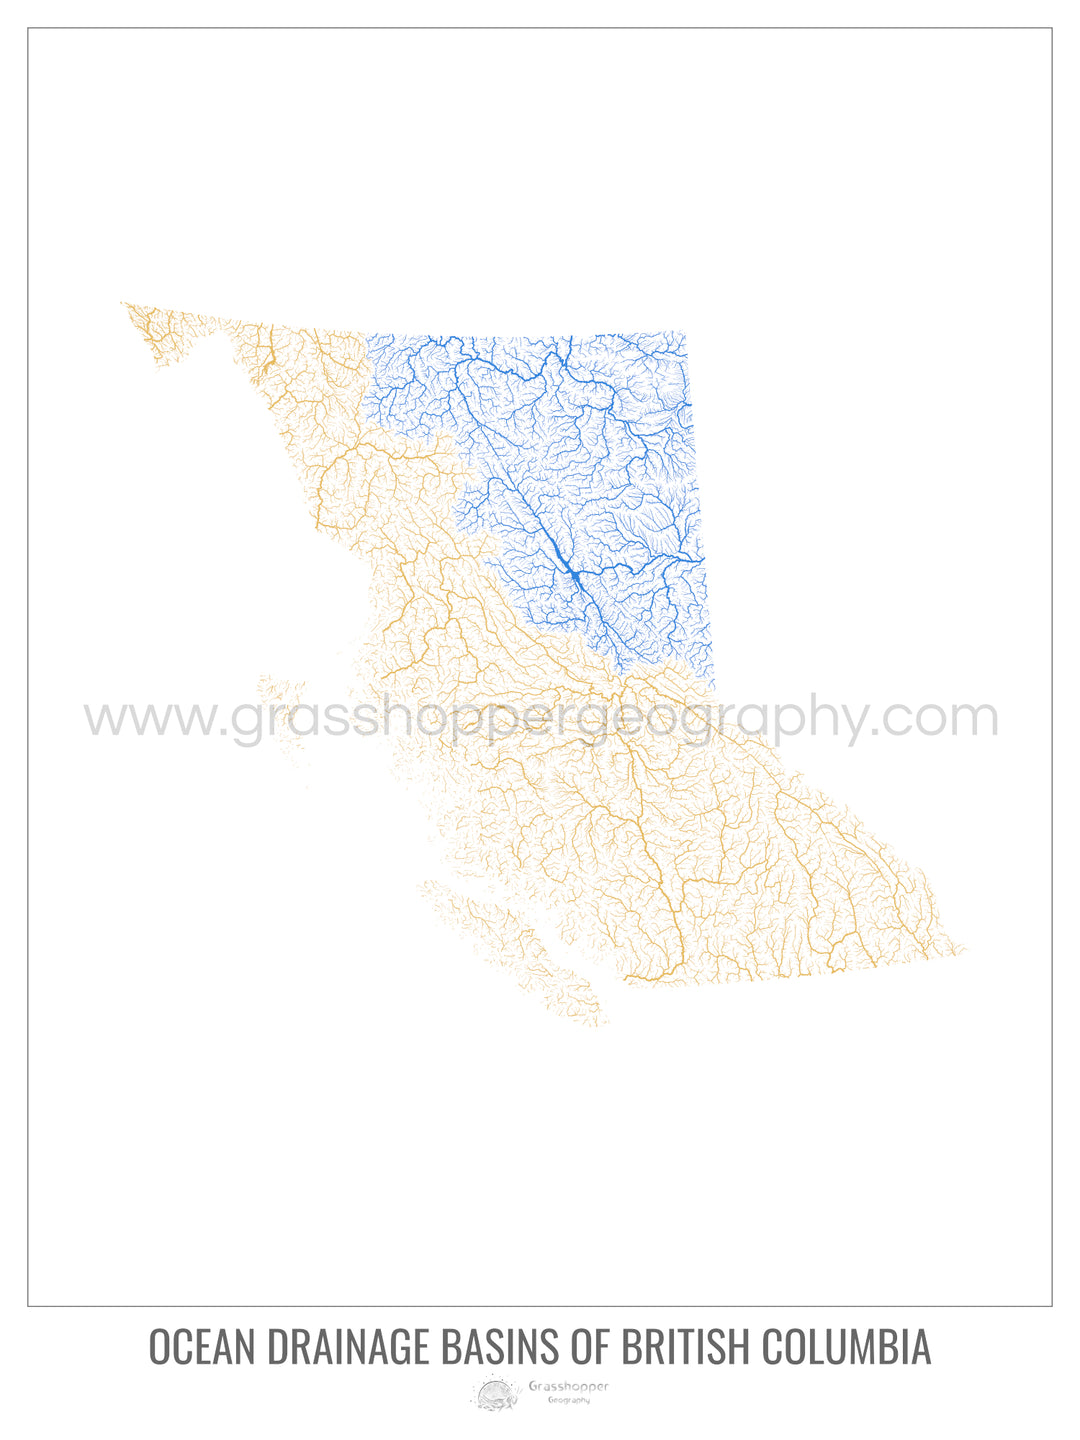 British Columbia - Ocean drainage basin map, white v1 - Fine Art Print with Hanger